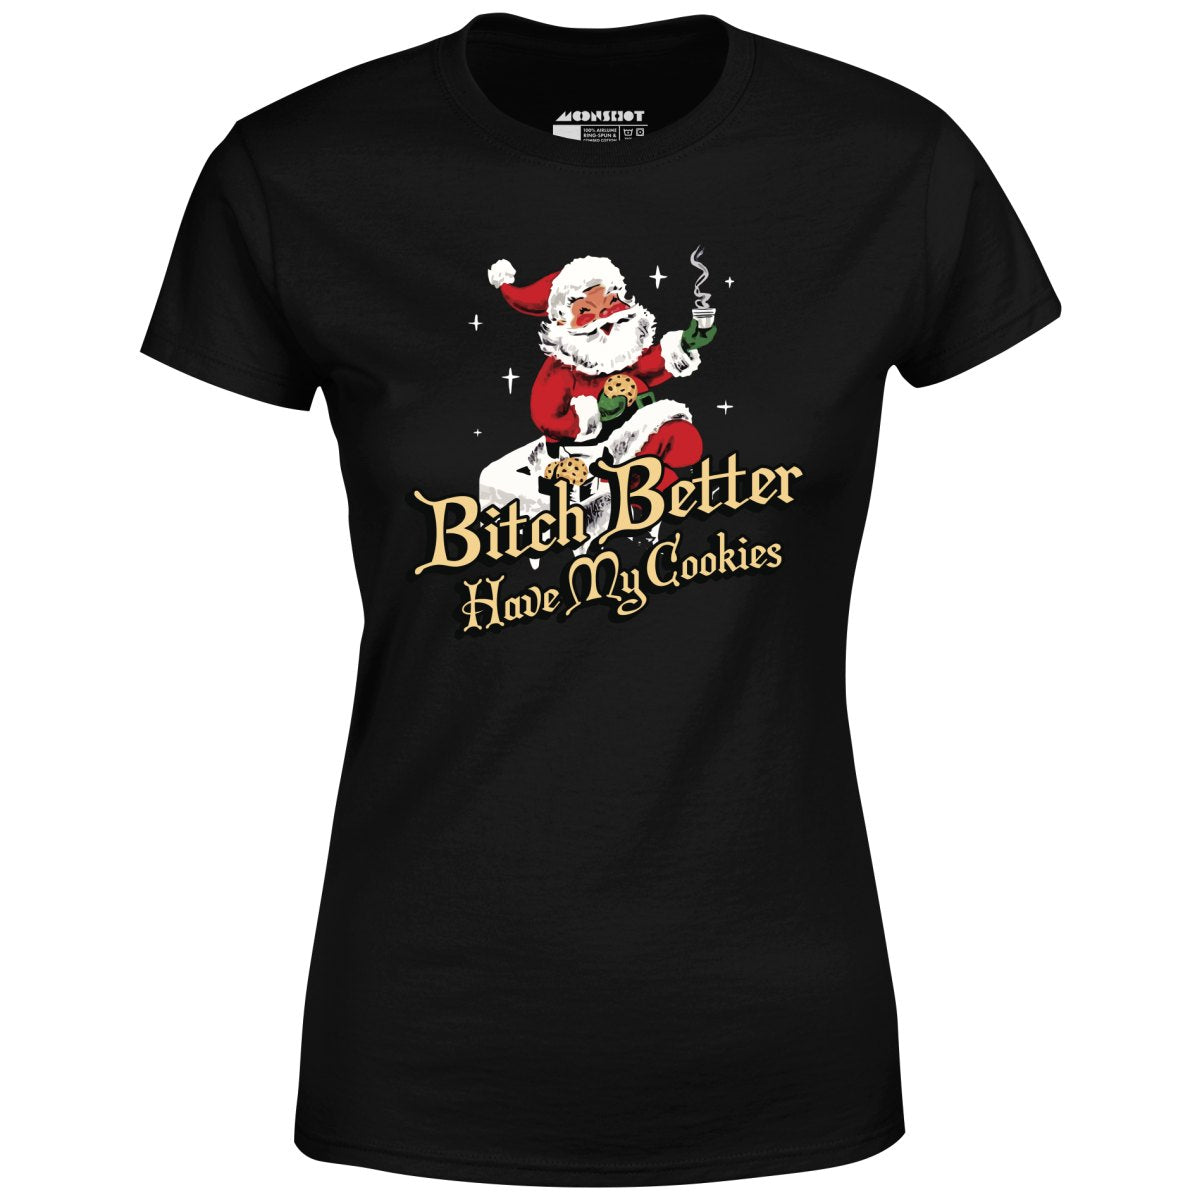 Bitch Better Have My Cookies - Women's T-Shirt